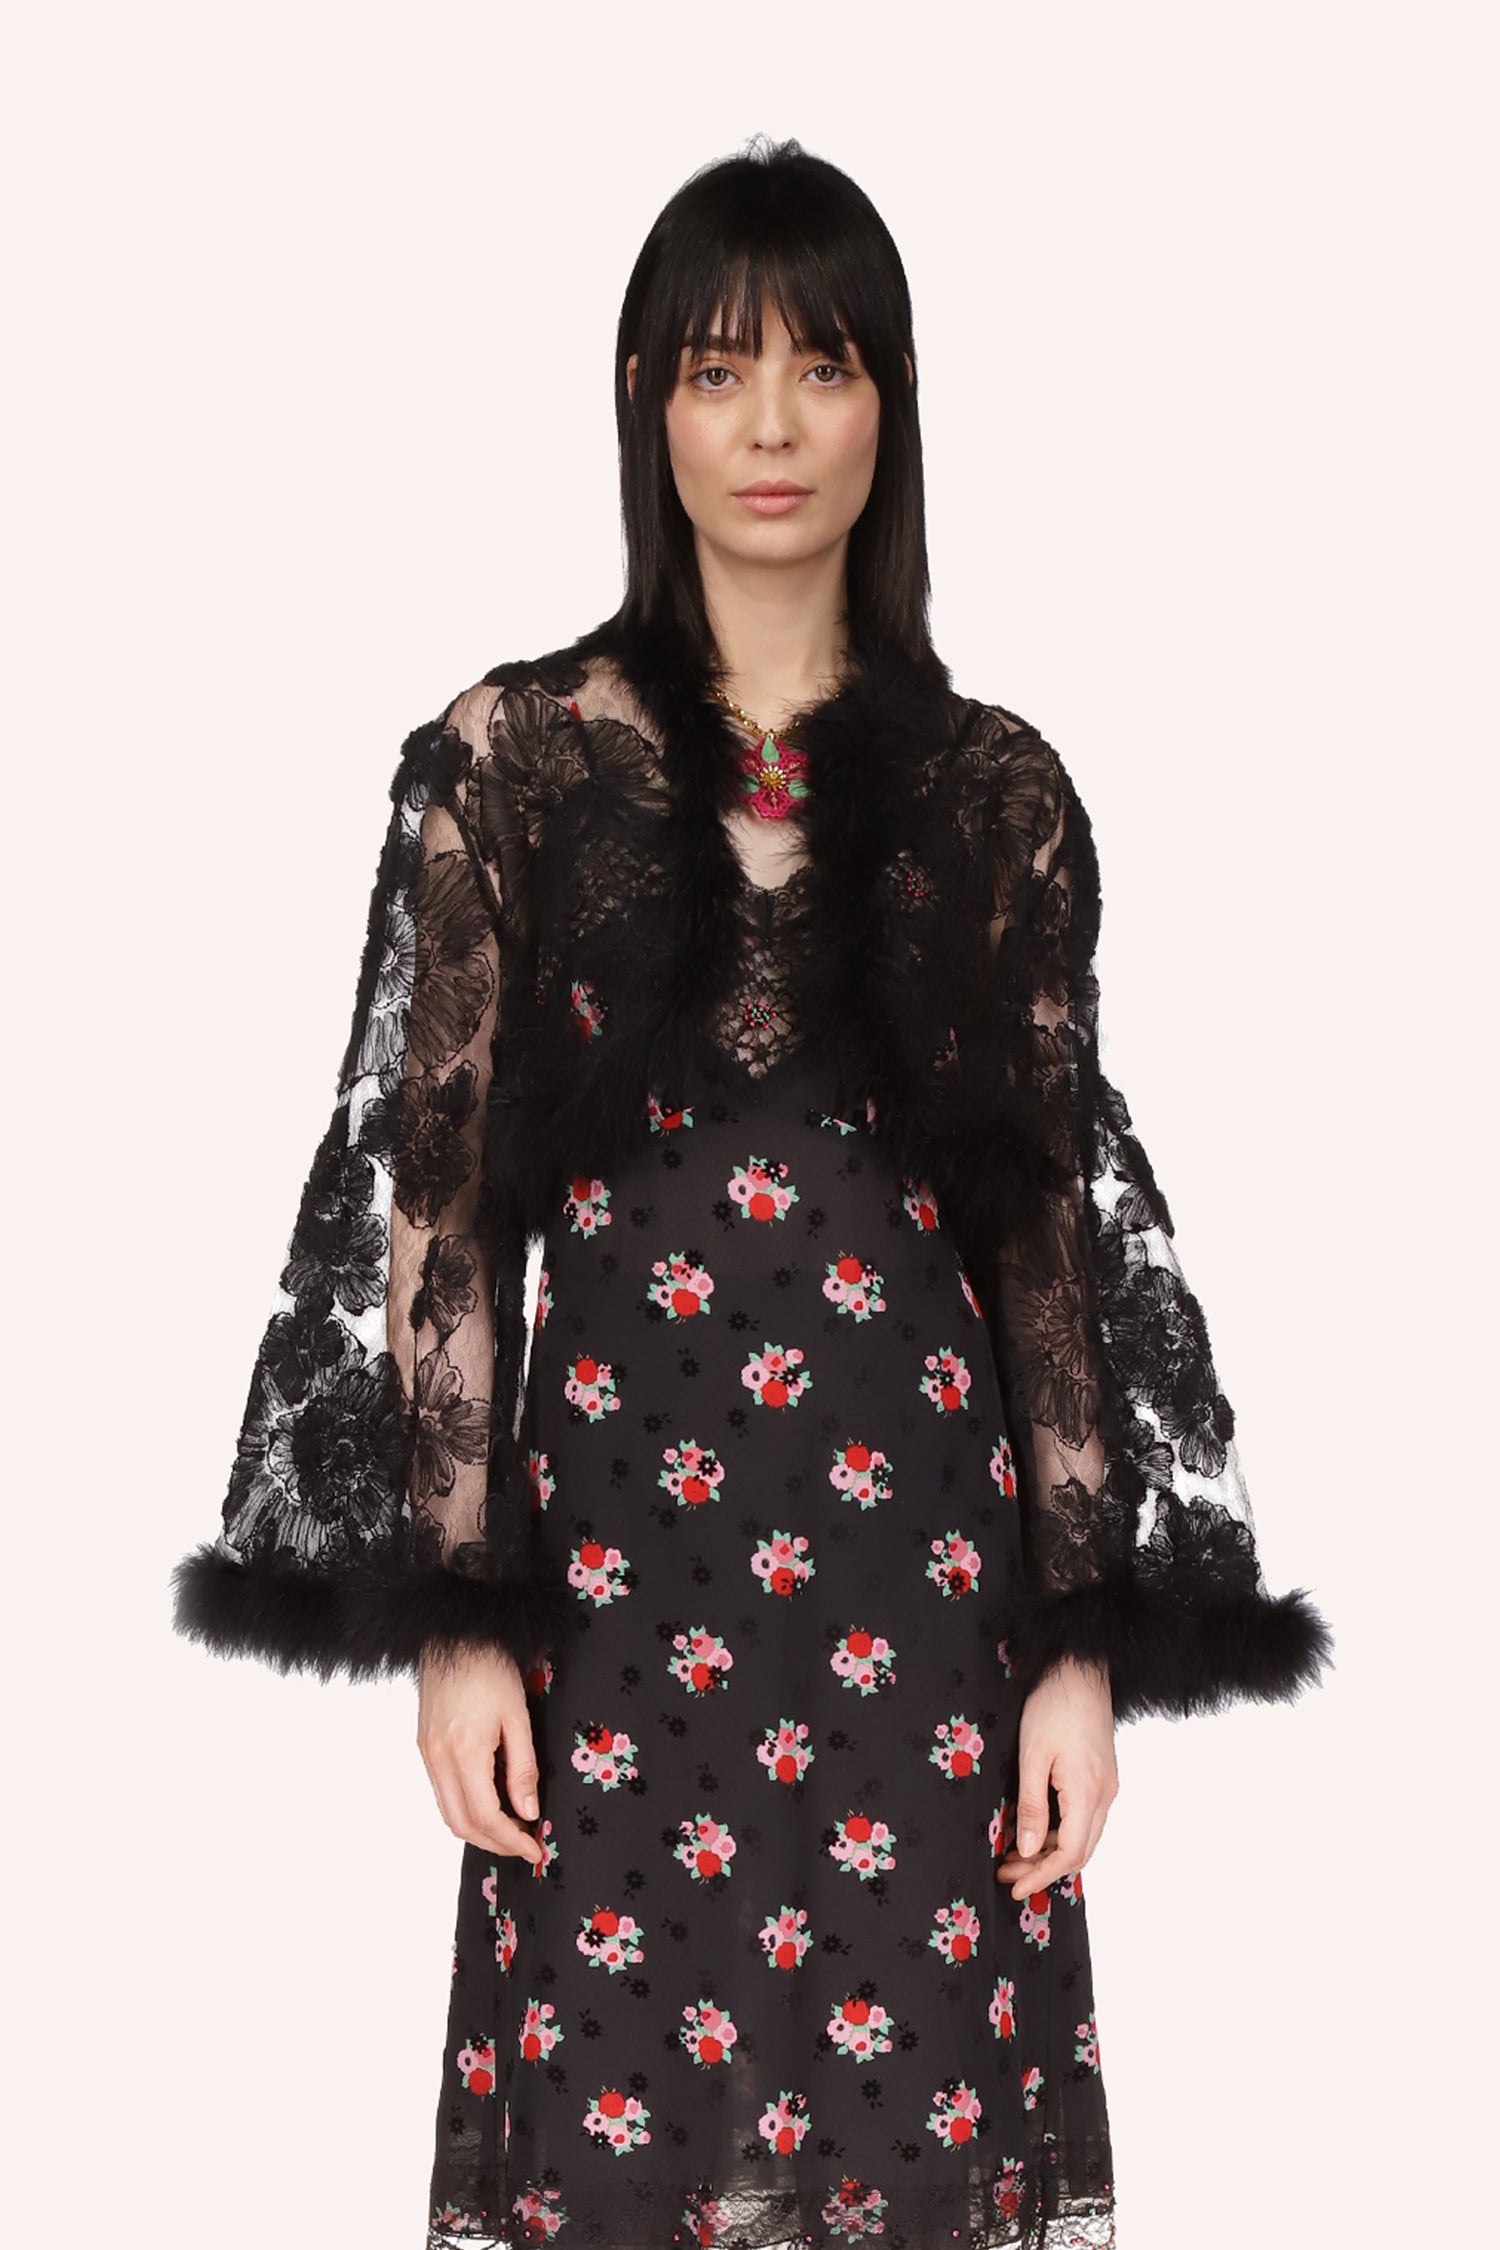 Sheer fabric, large black flowers, fur at borders, Jacket is under breast length